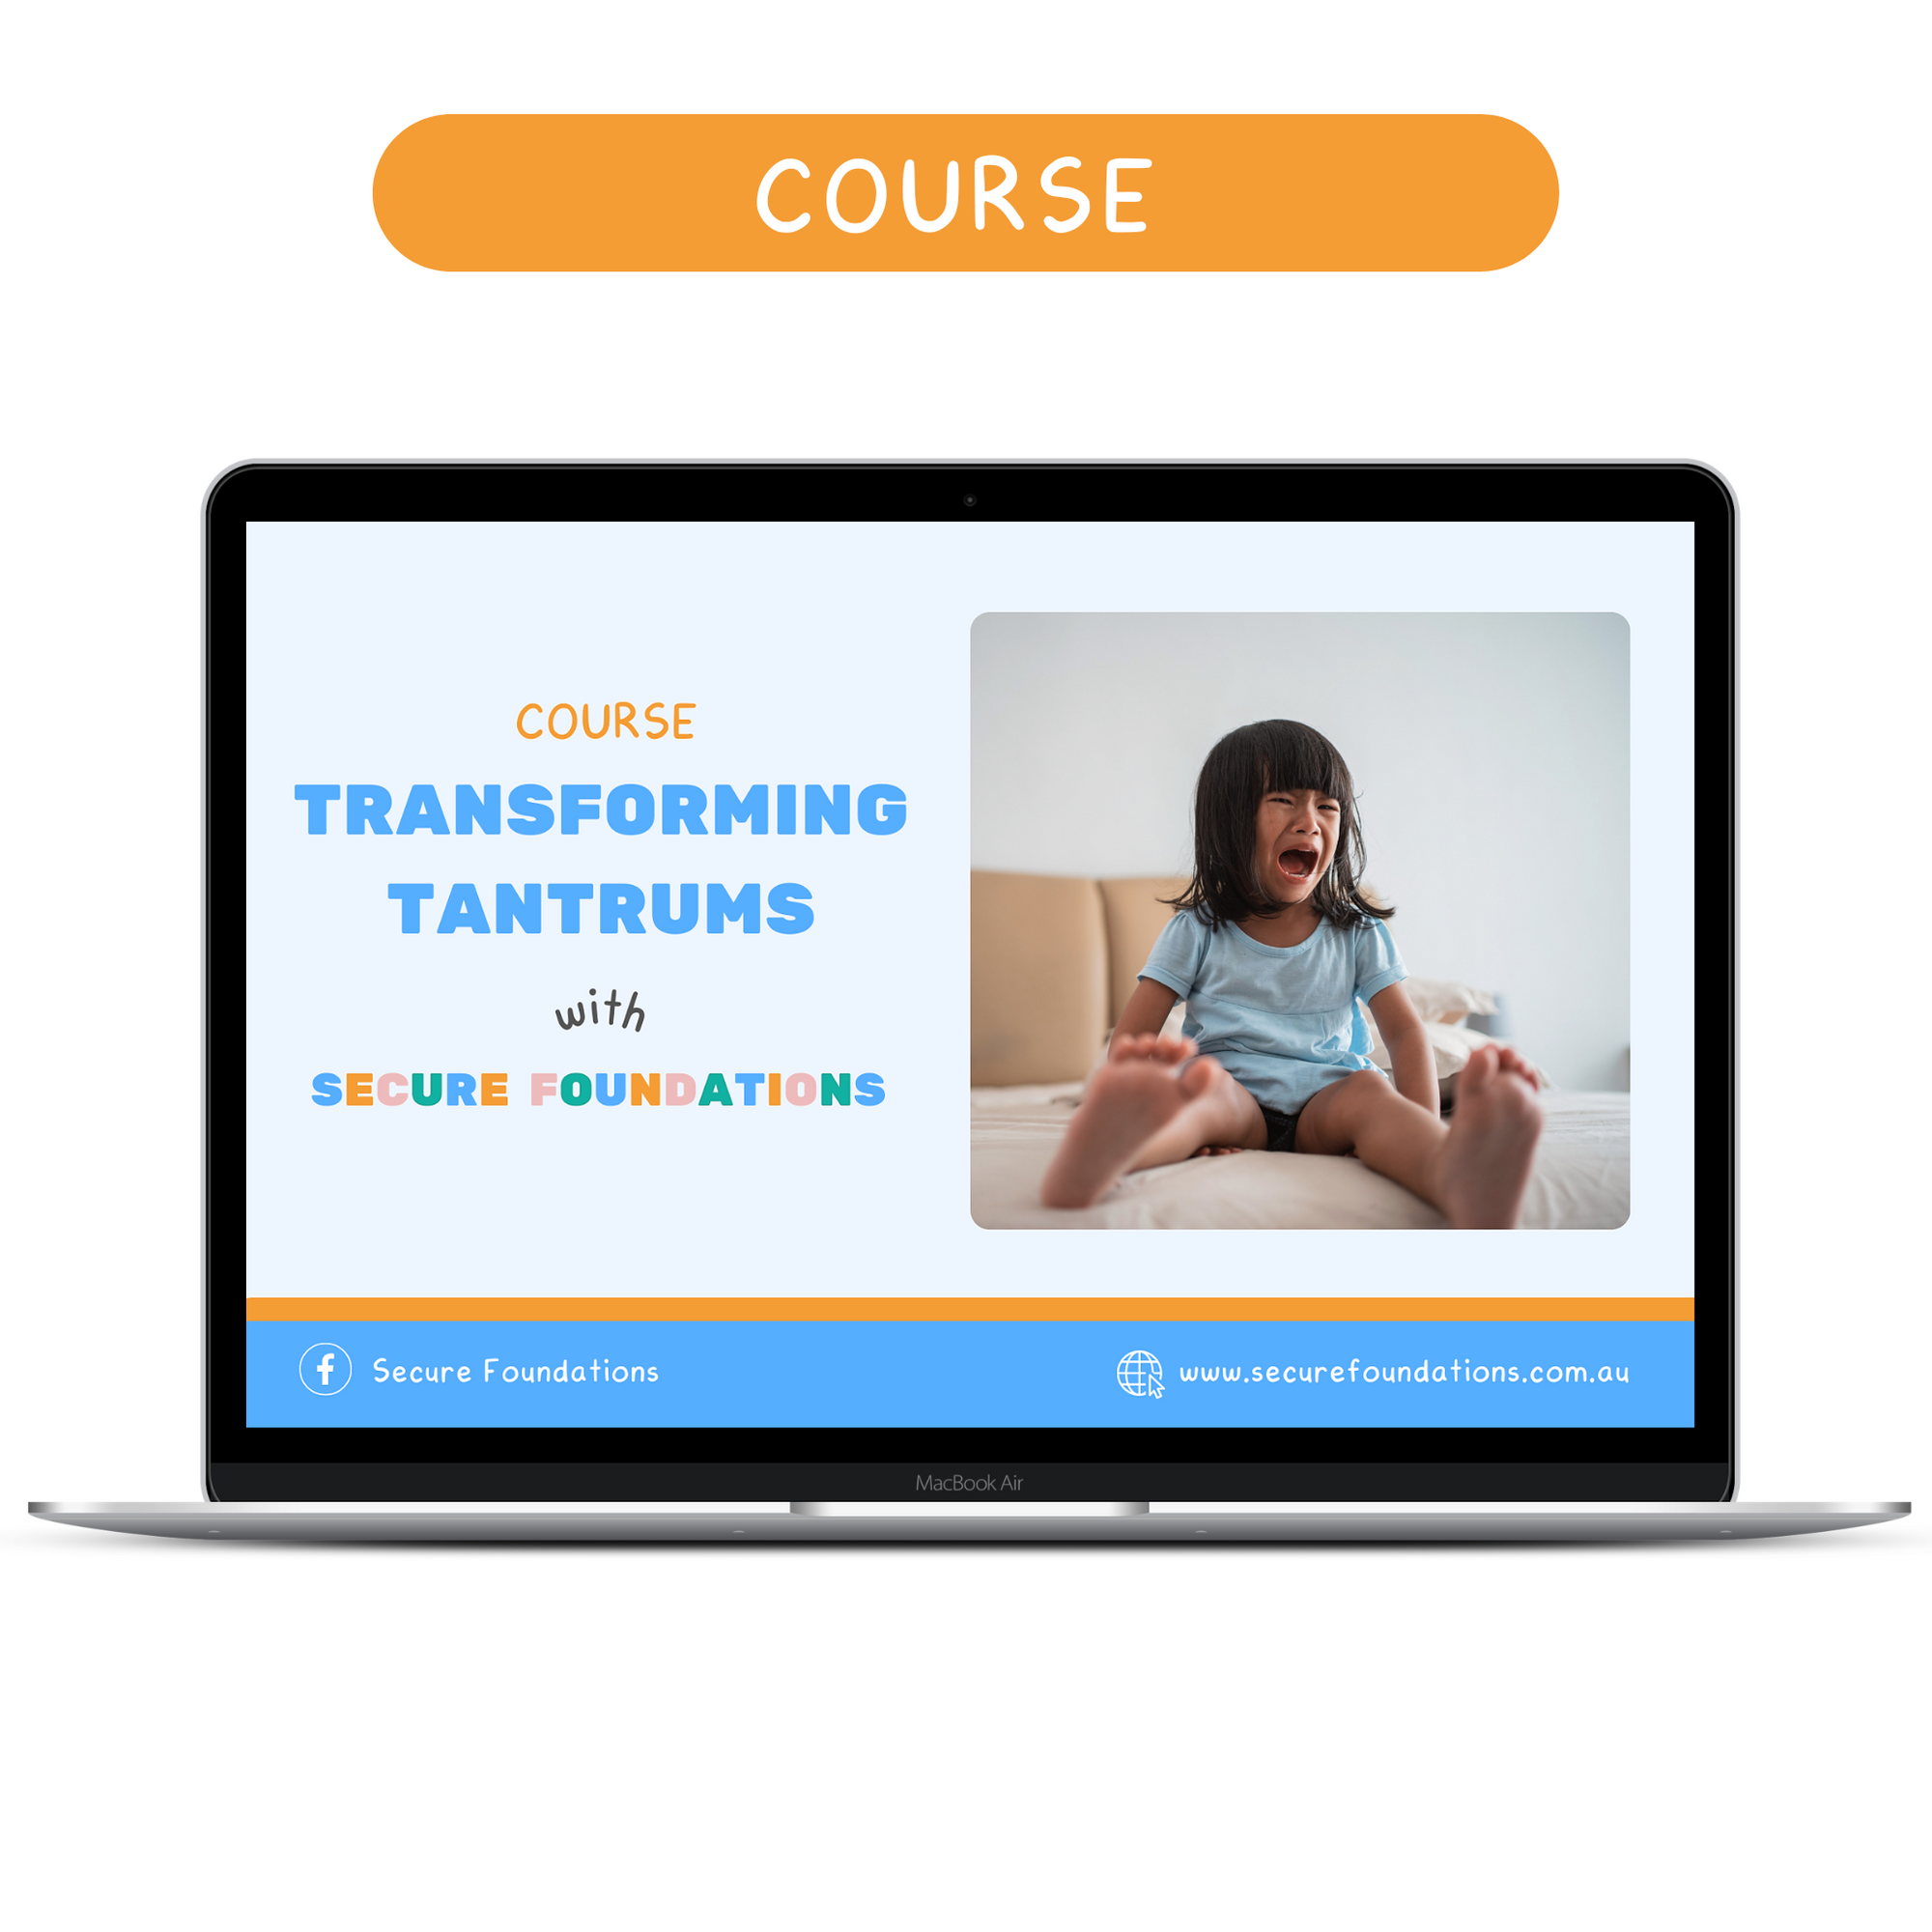 Course: Transforming Tantrums